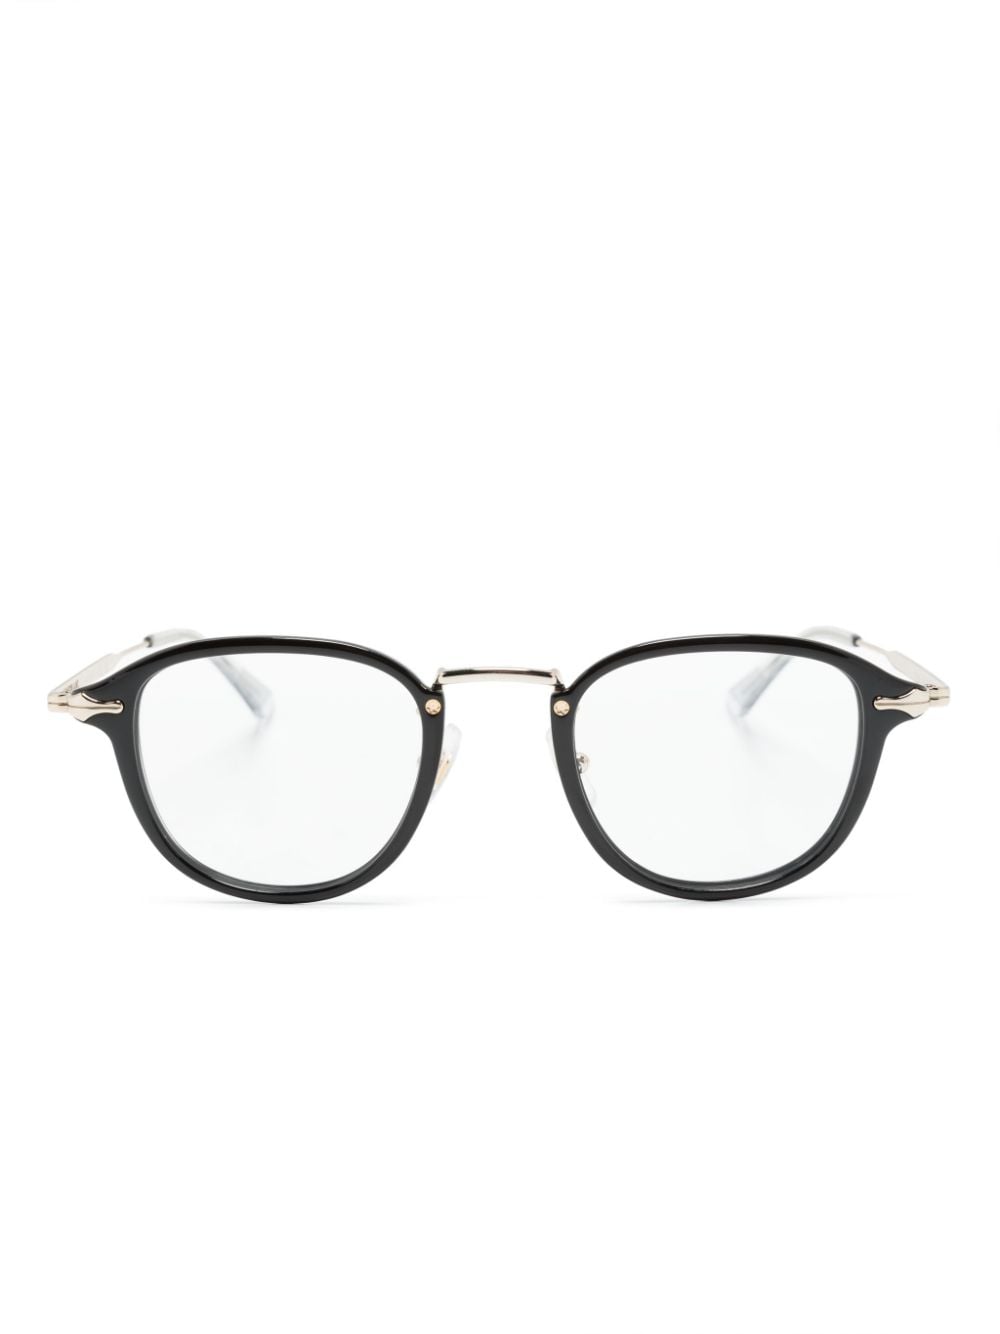 Montblanc Round-frame Glasses In Black